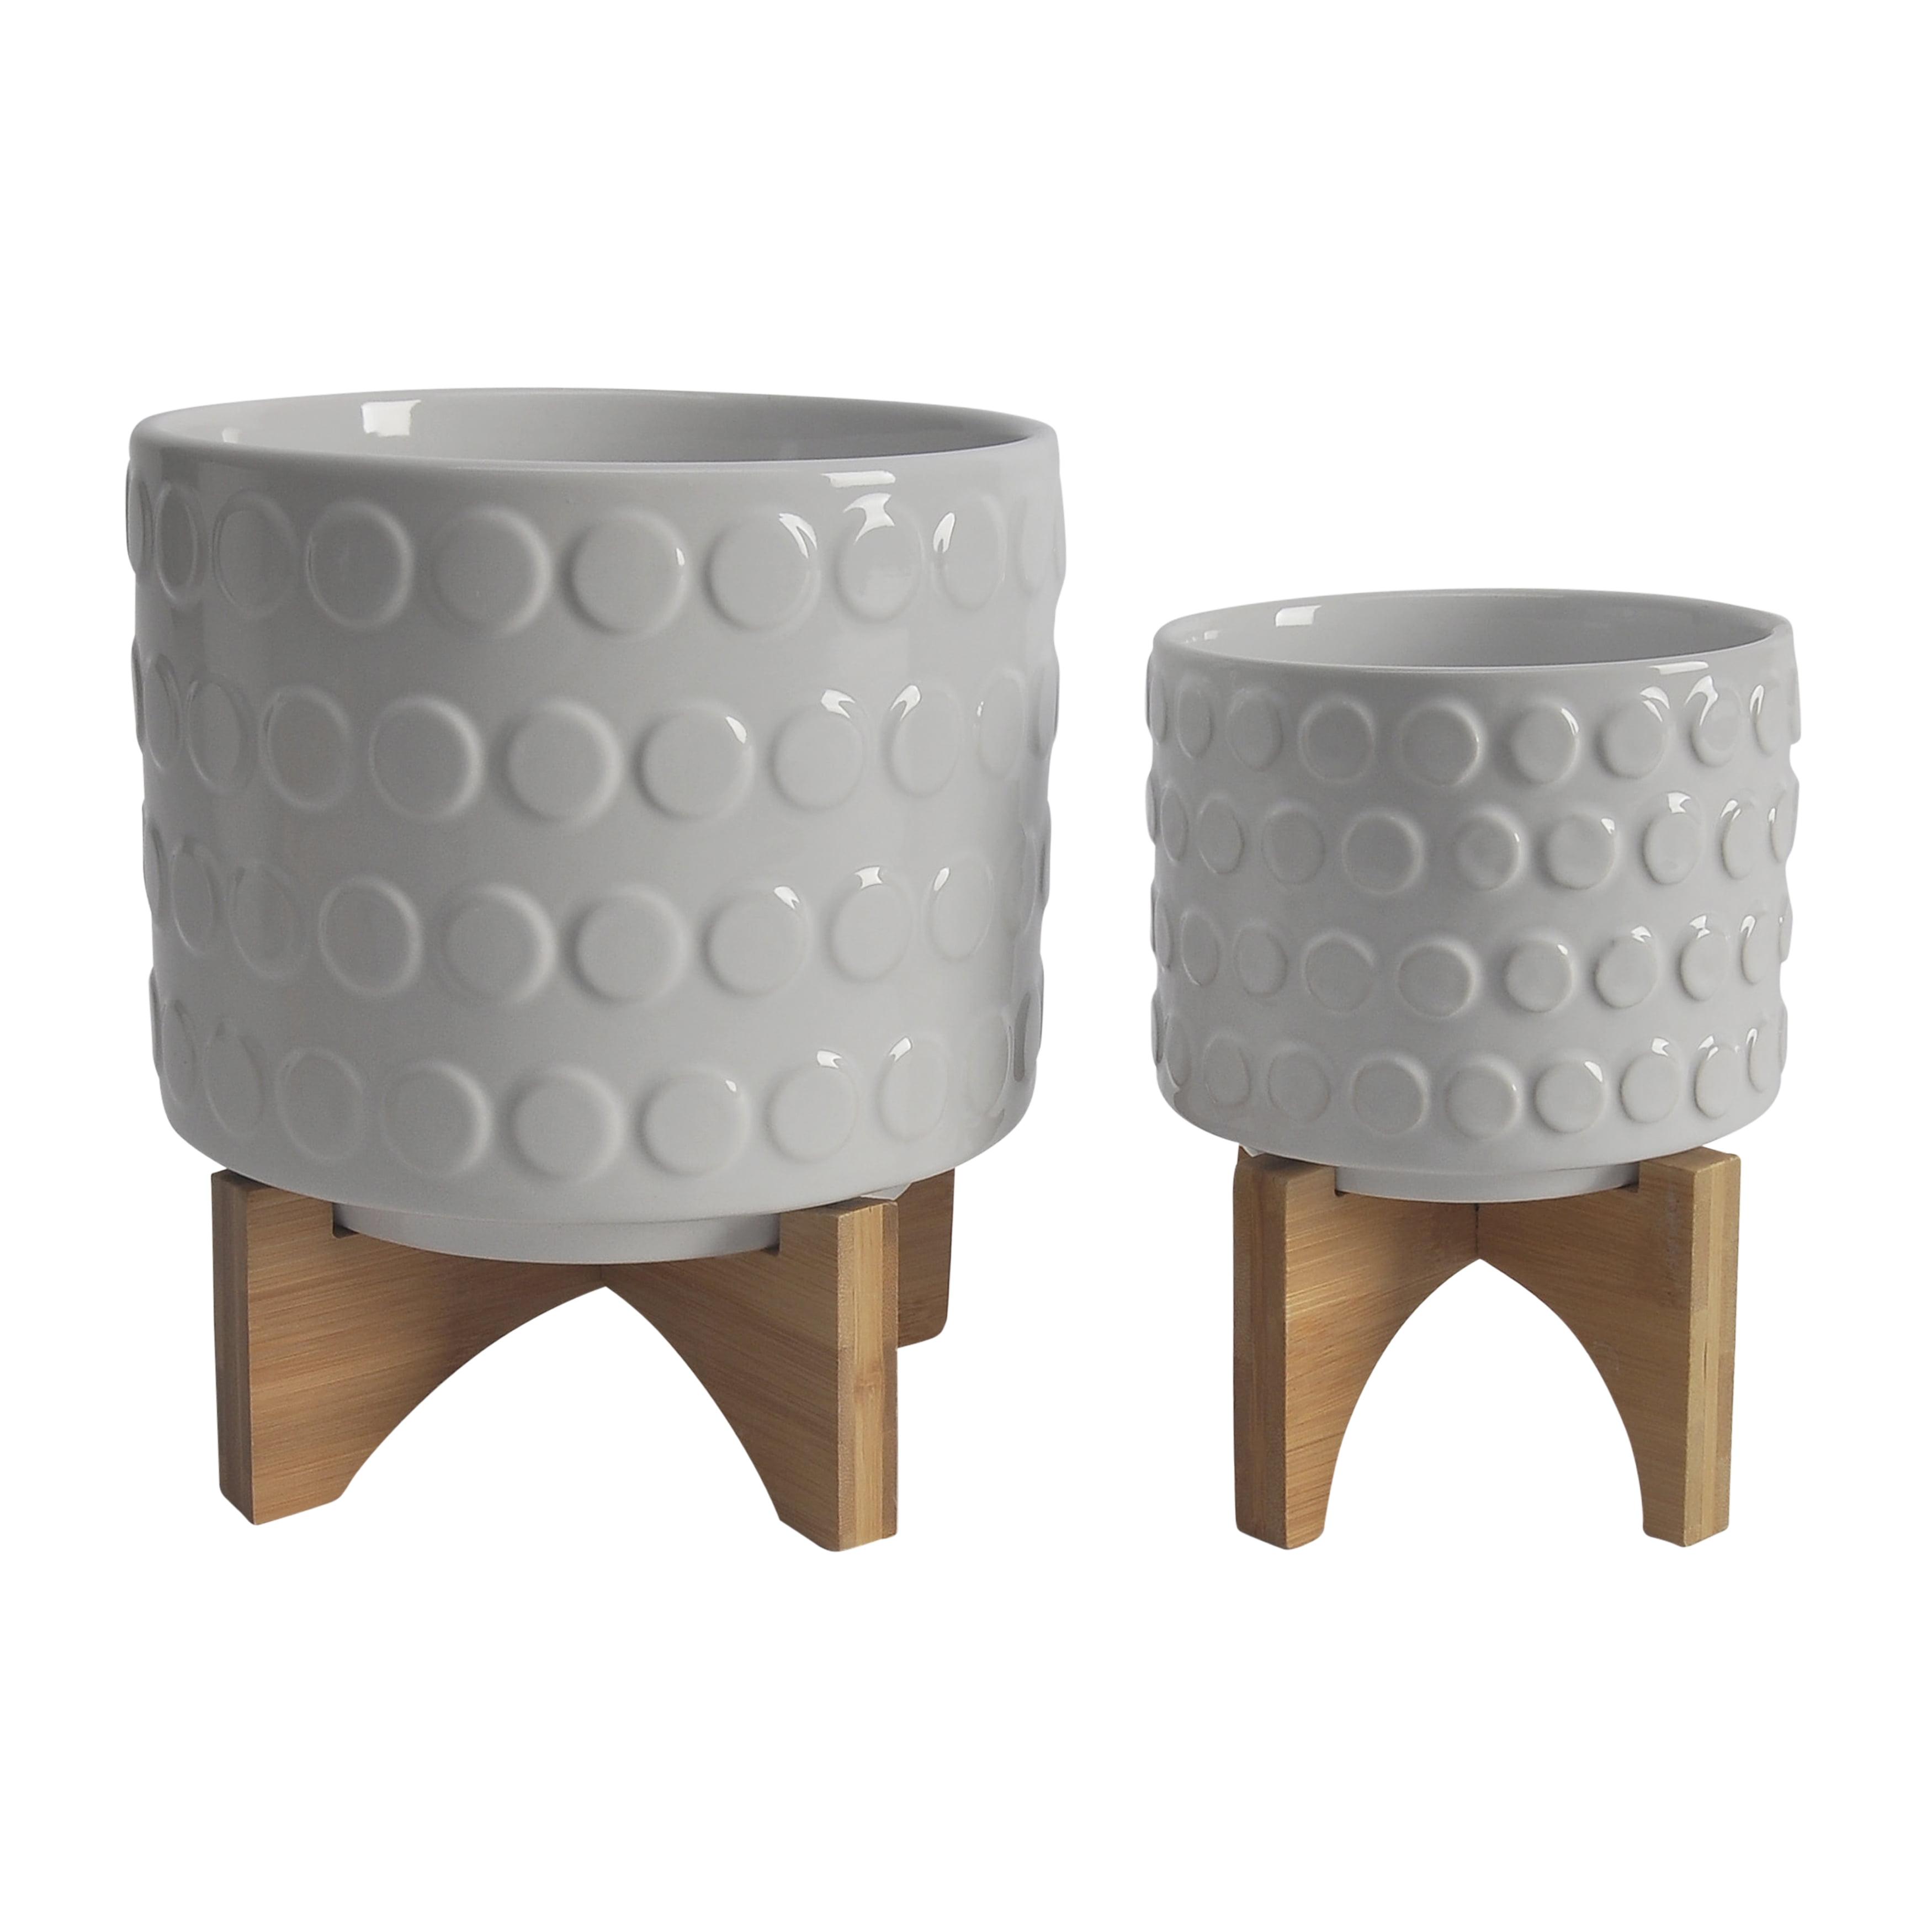 Contemporary White Ceramic Planter Set on Bamboo Stand, 8"x11"